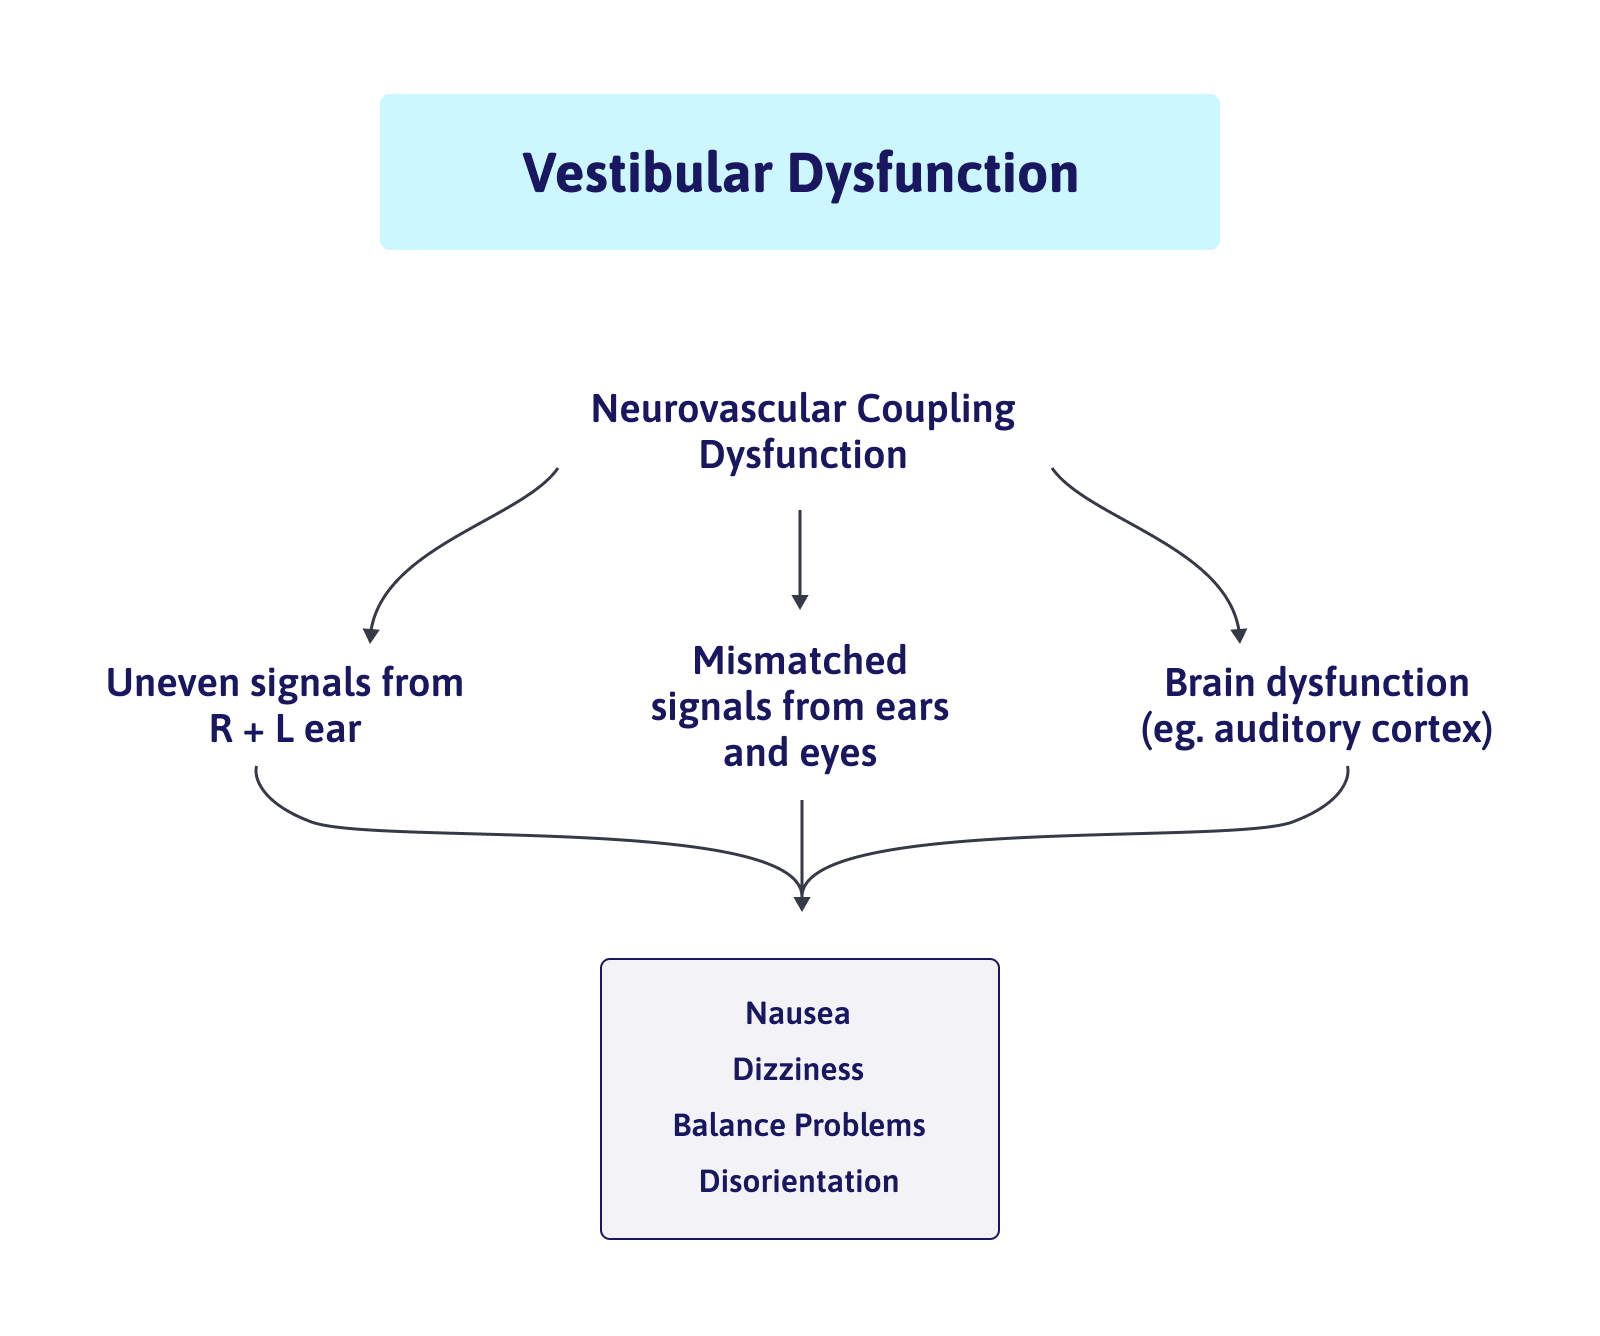 Neurovascular coupling dysfunction.